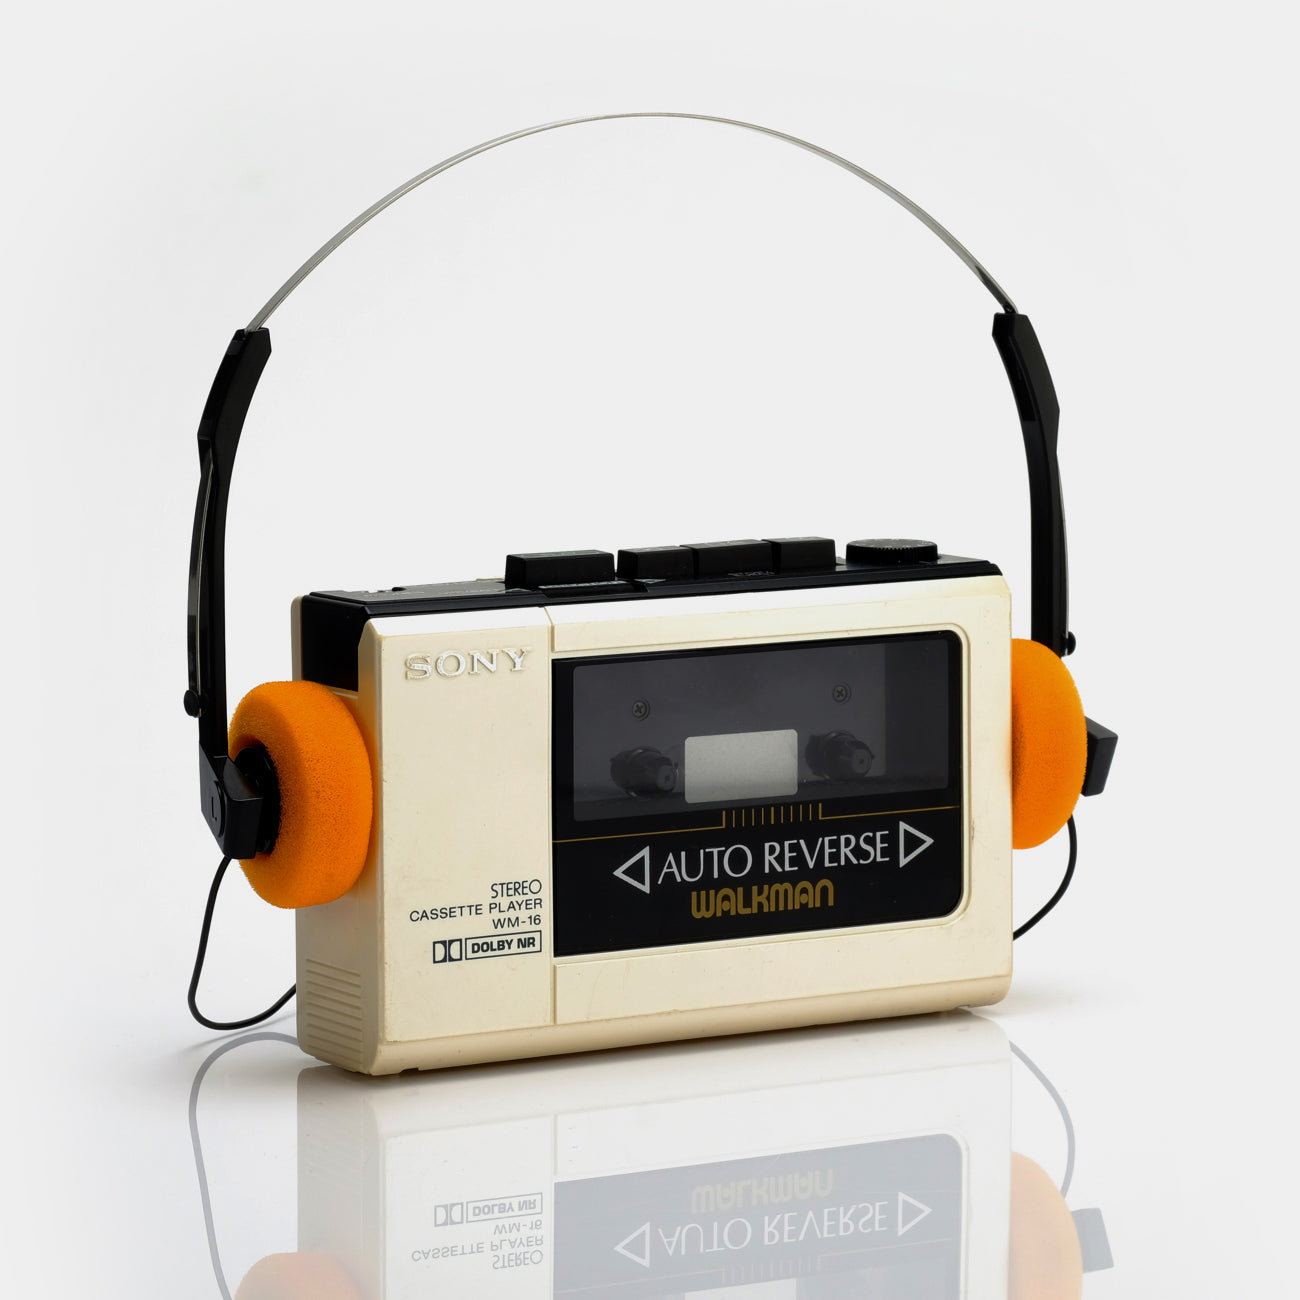 Sony Walkman WM-16 Portable Cassette Player